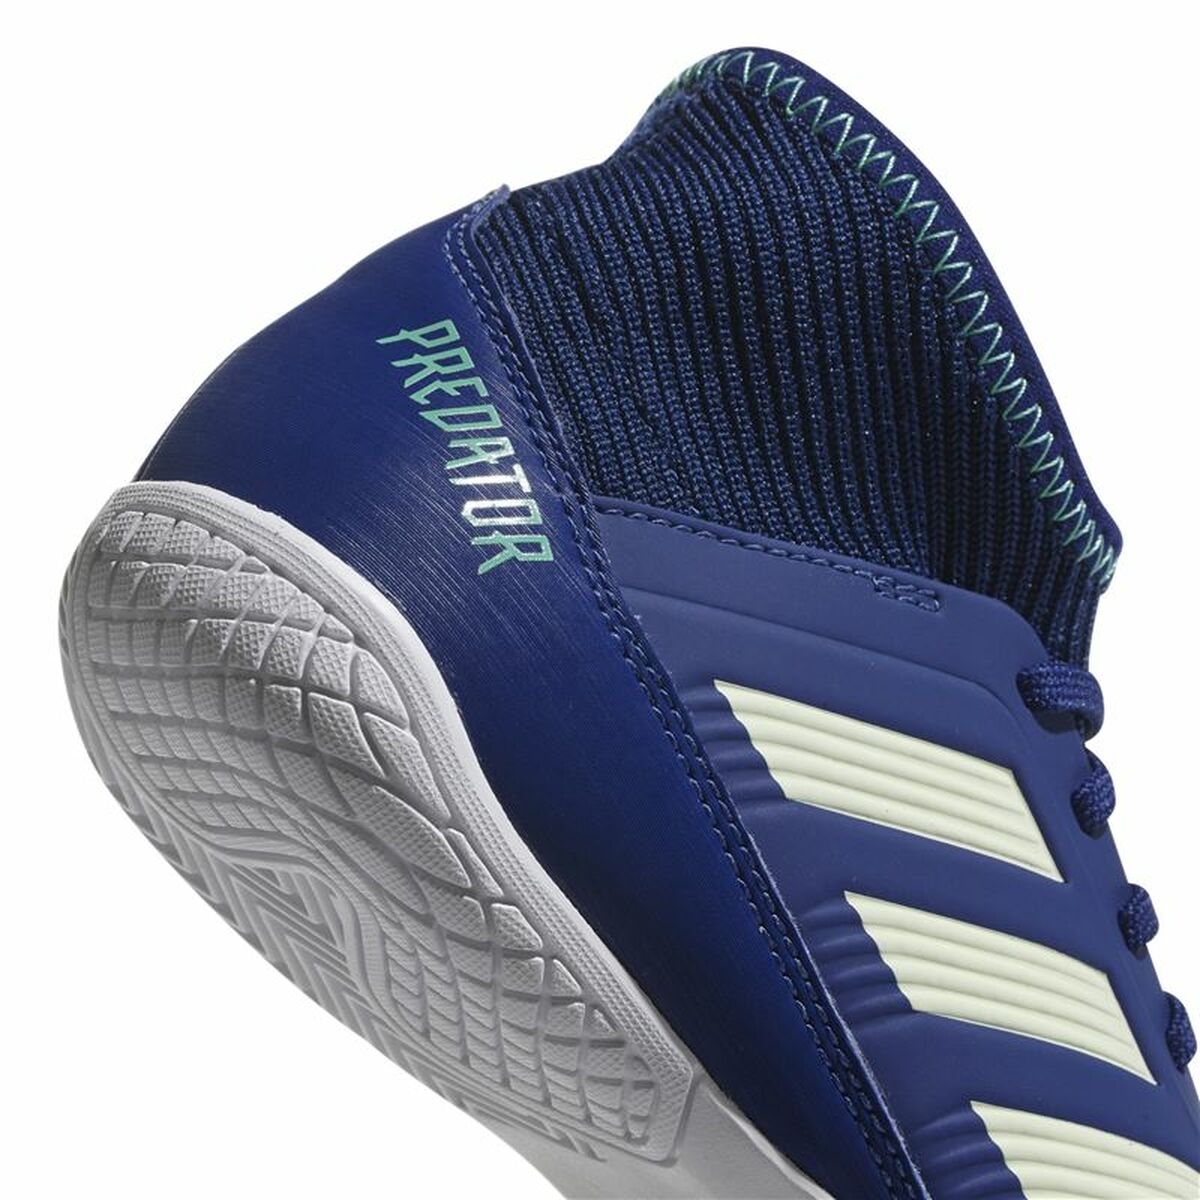 Indoor Football Shoes Adidas Predator Tango Dark blue Boys